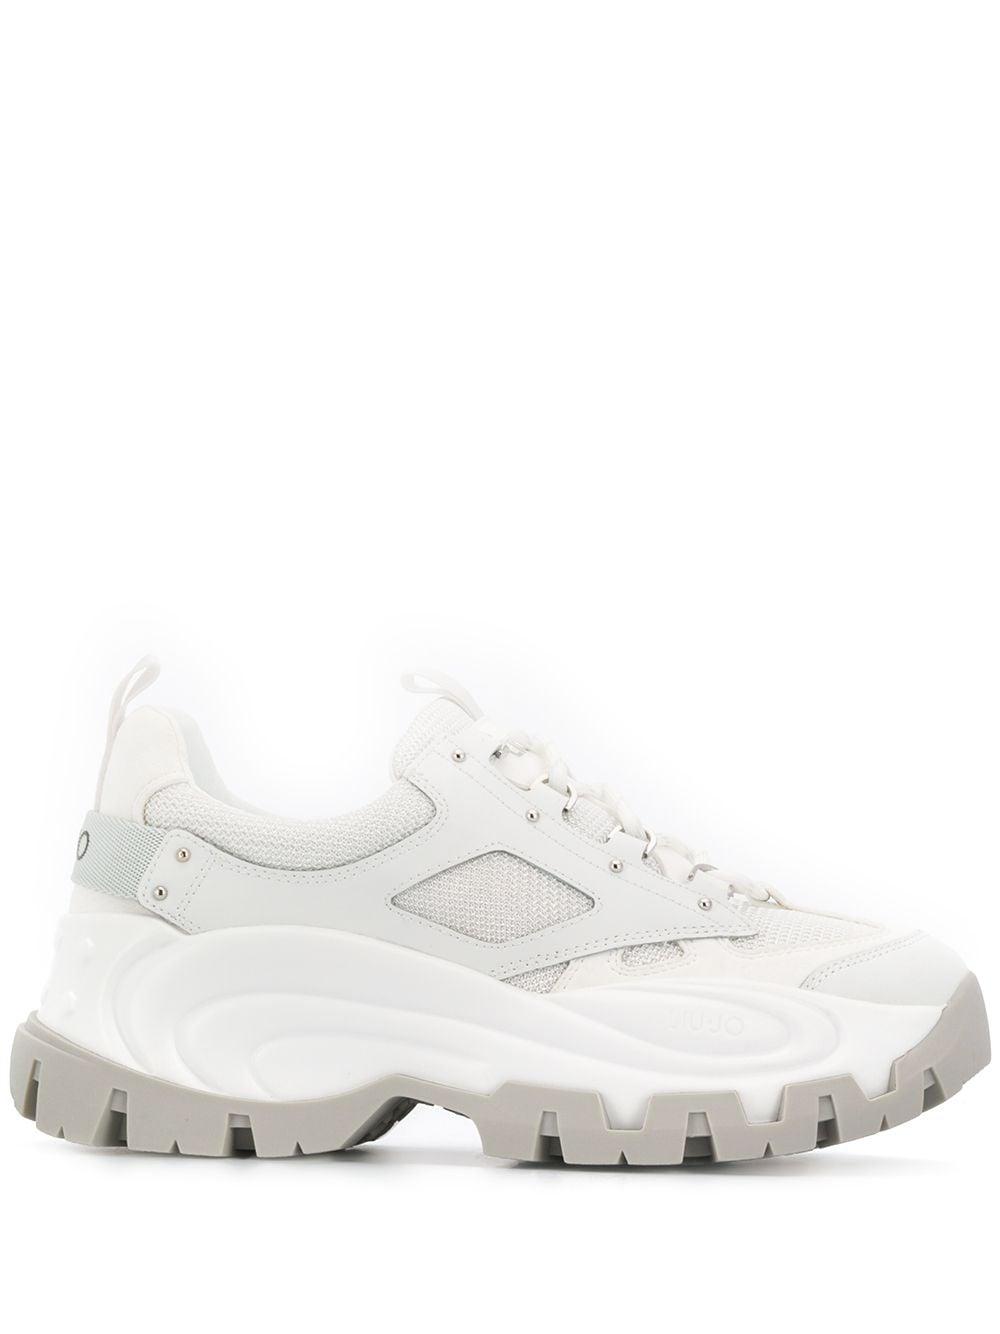 Liu Jo Leather Wave Low-top Sneakers in White - Lyst